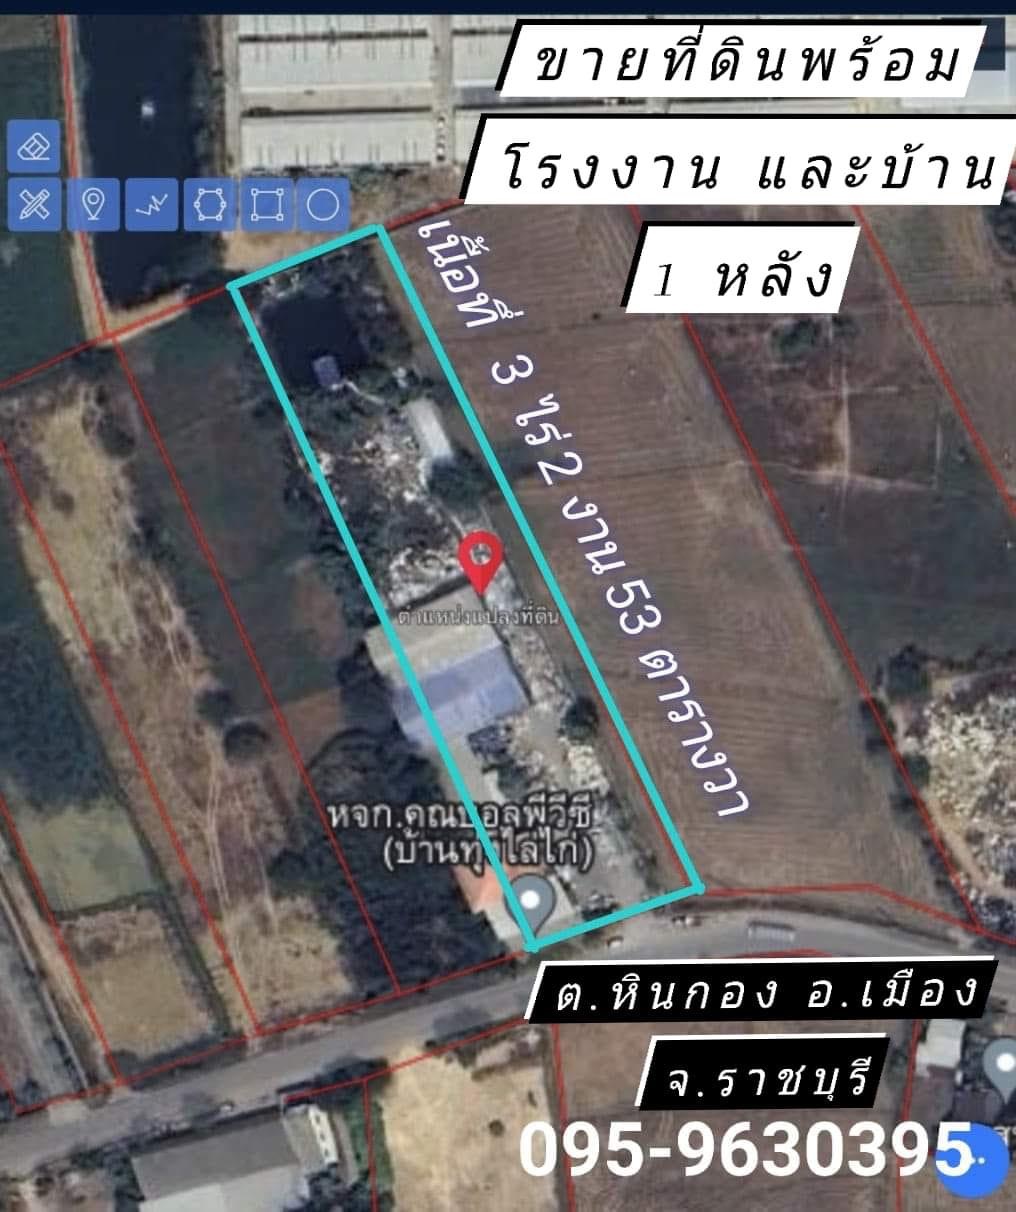 SaleFactory M-3494 ขายที่ดิน พร้อมโรงงาน 3-2-53 ไร่ อ.เมืองราชบุรี จ.ราชบุรี